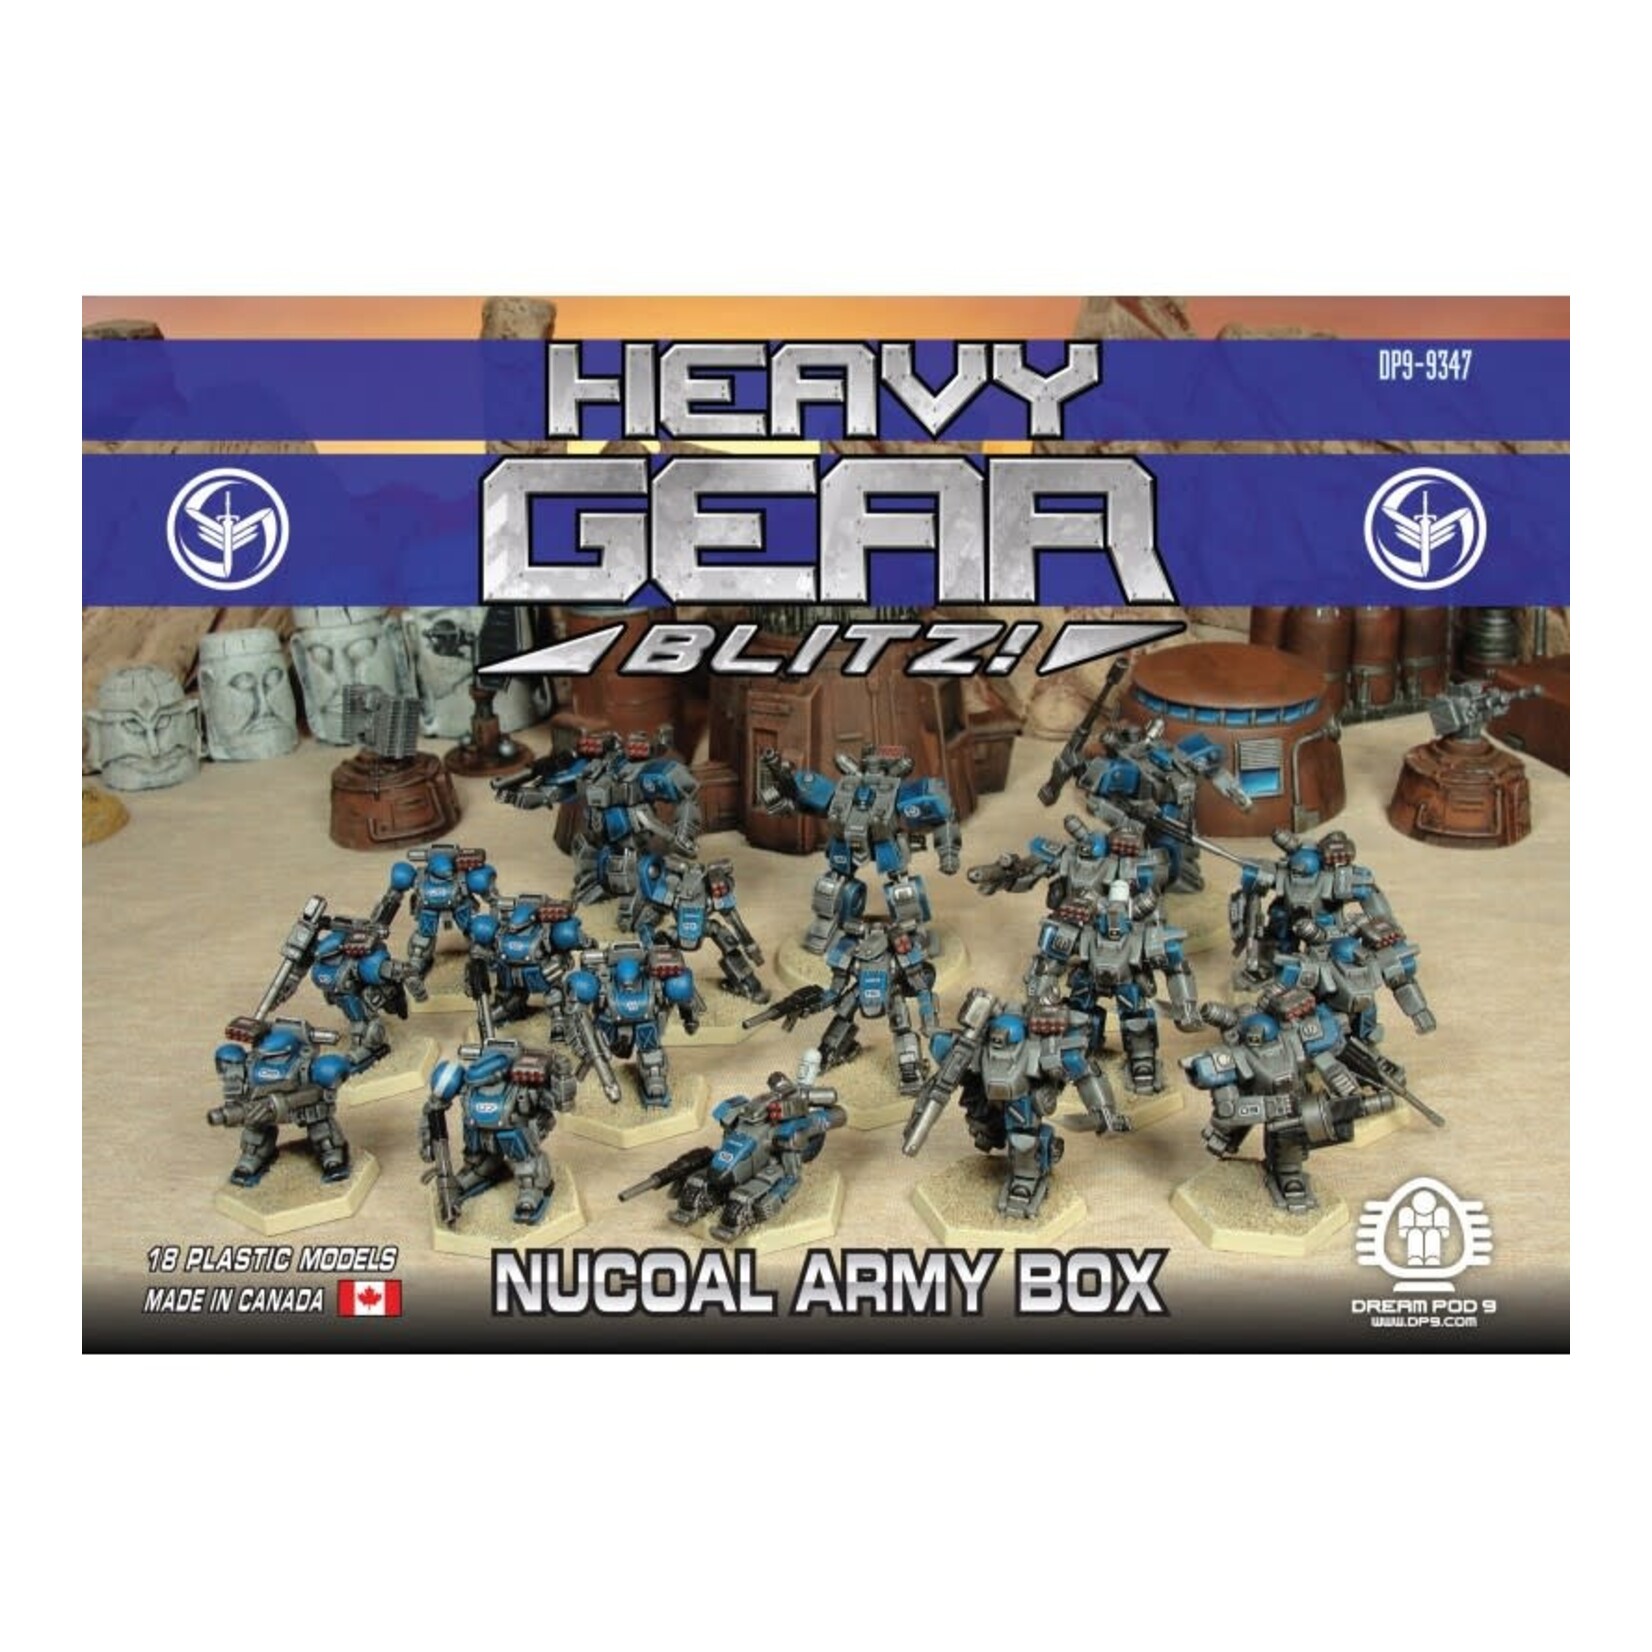 Dream Pod 9 Heavy Gear Blitz - NuCoal Army Box